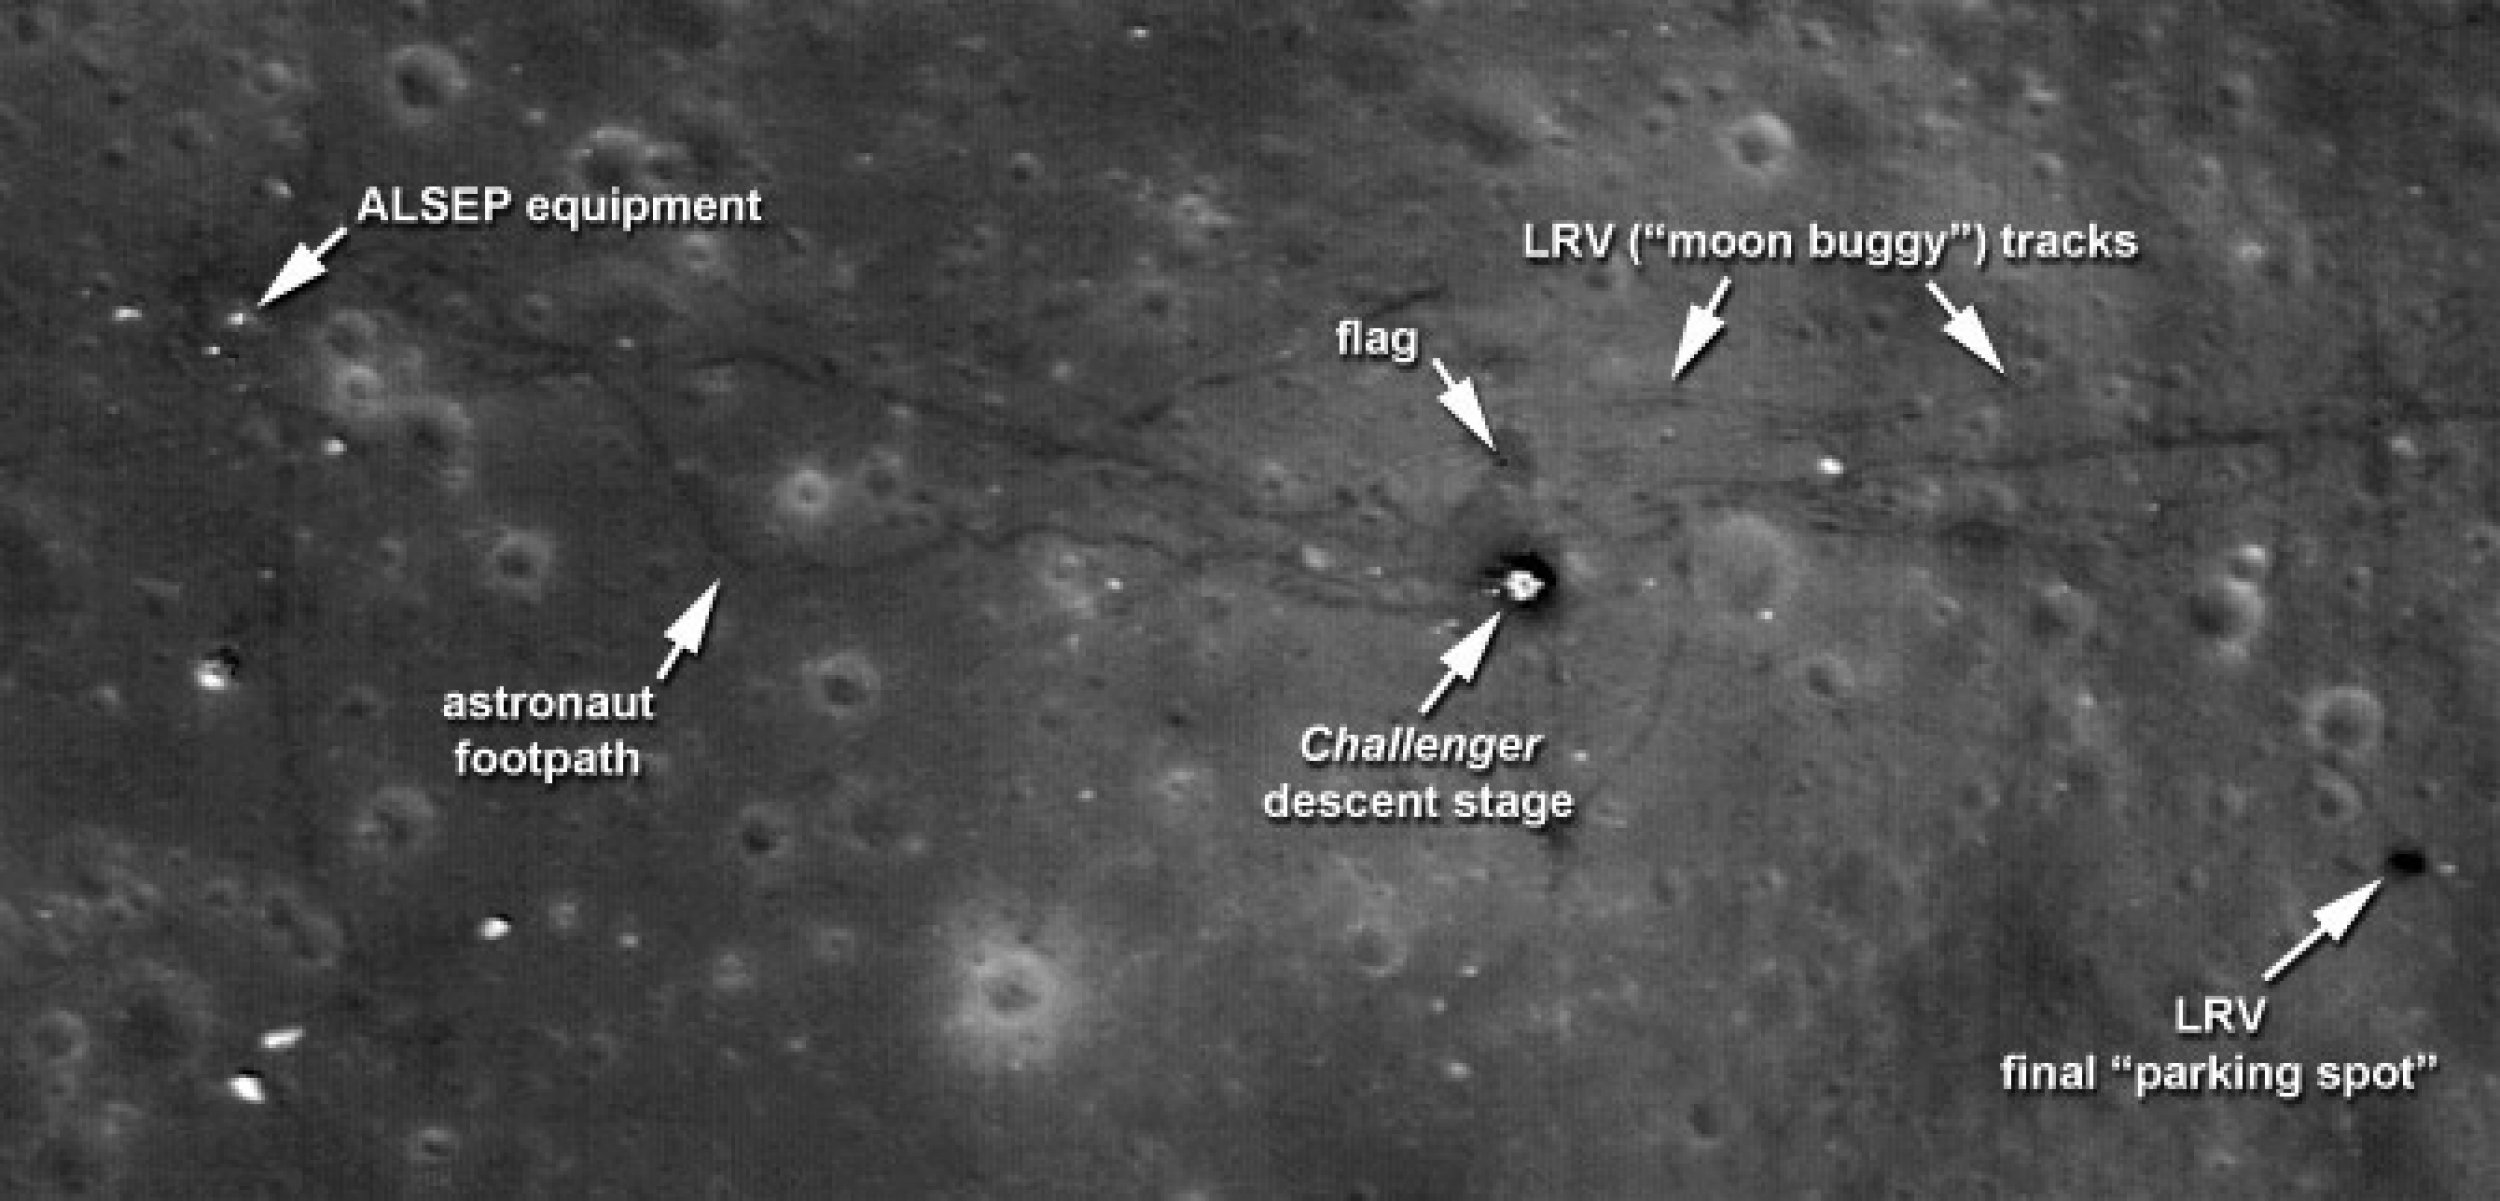 Image of the Apollo 17 landing site